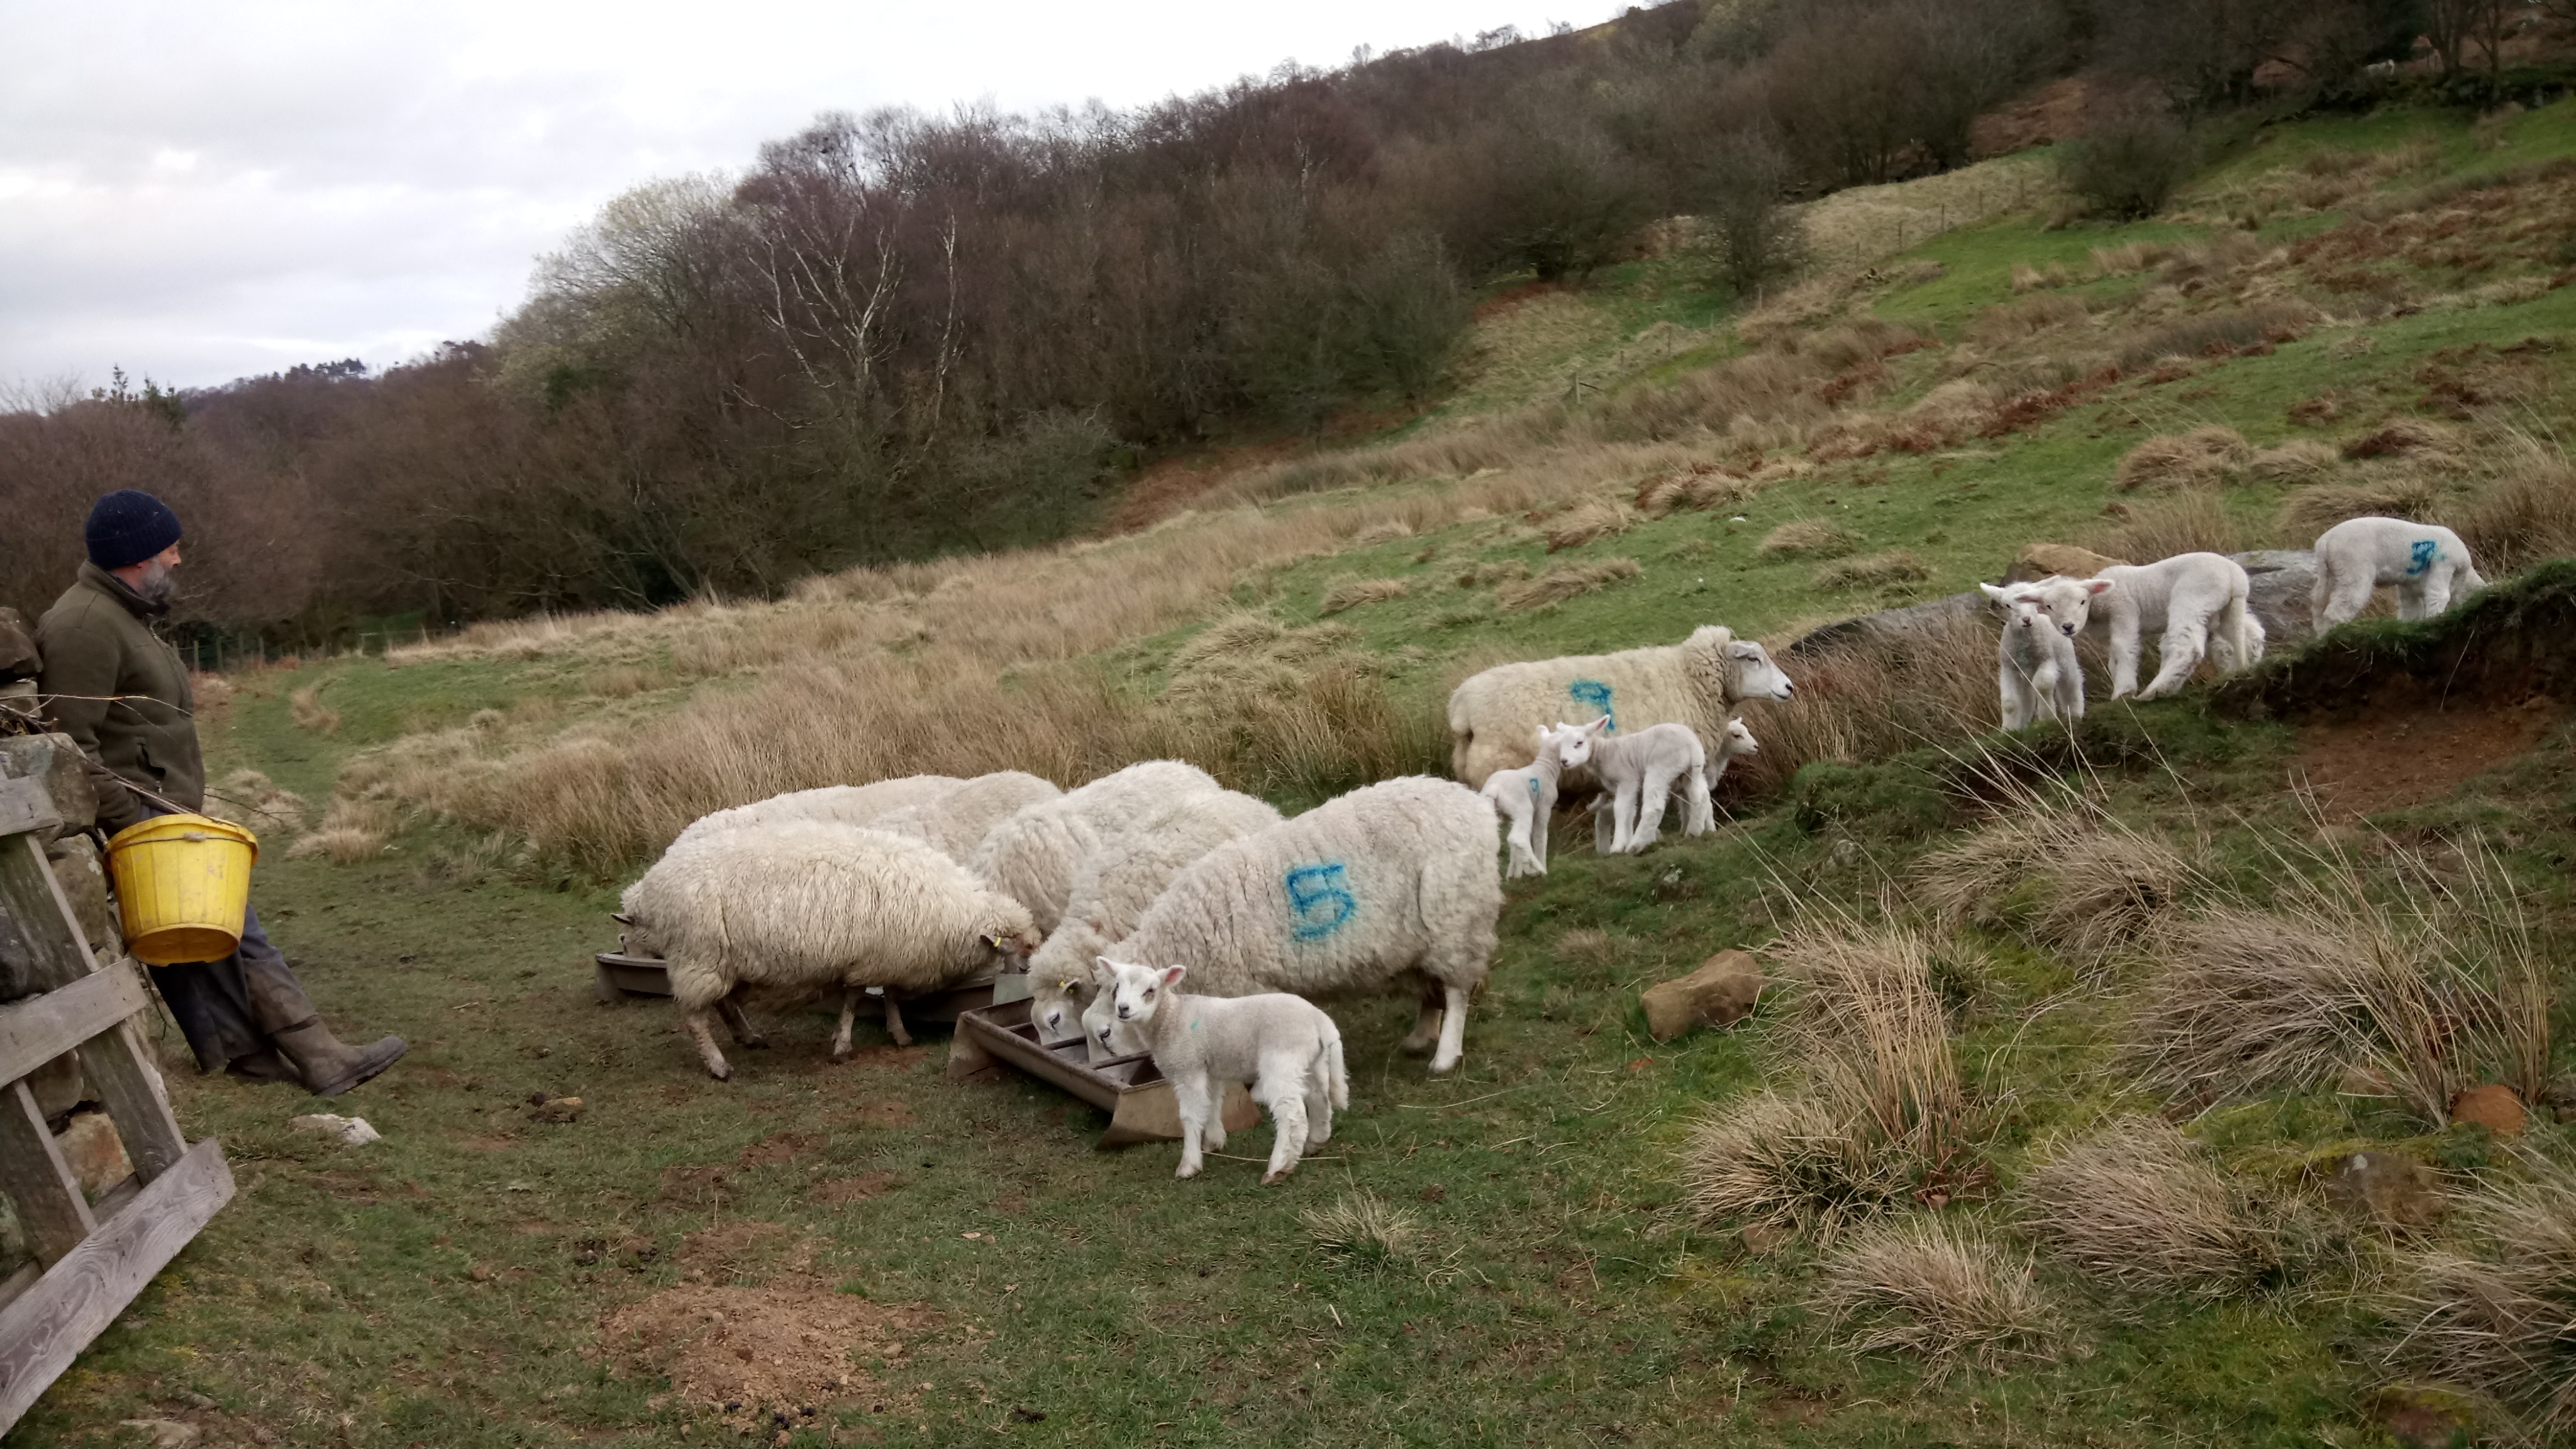 Chris feeding sheep w lambs